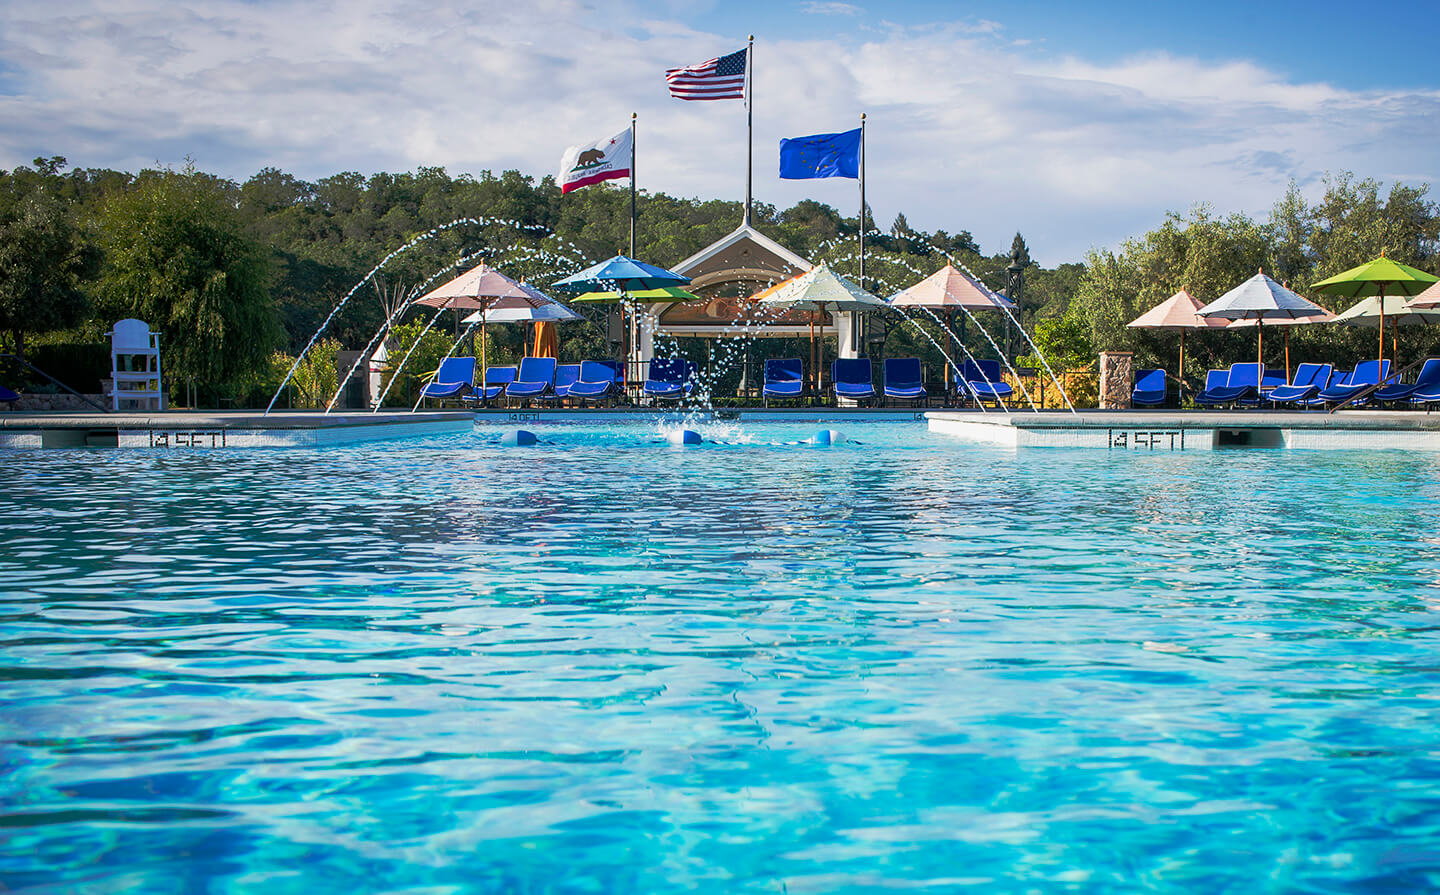 Pool Open! Membership, Passes & Cabana Rates Information